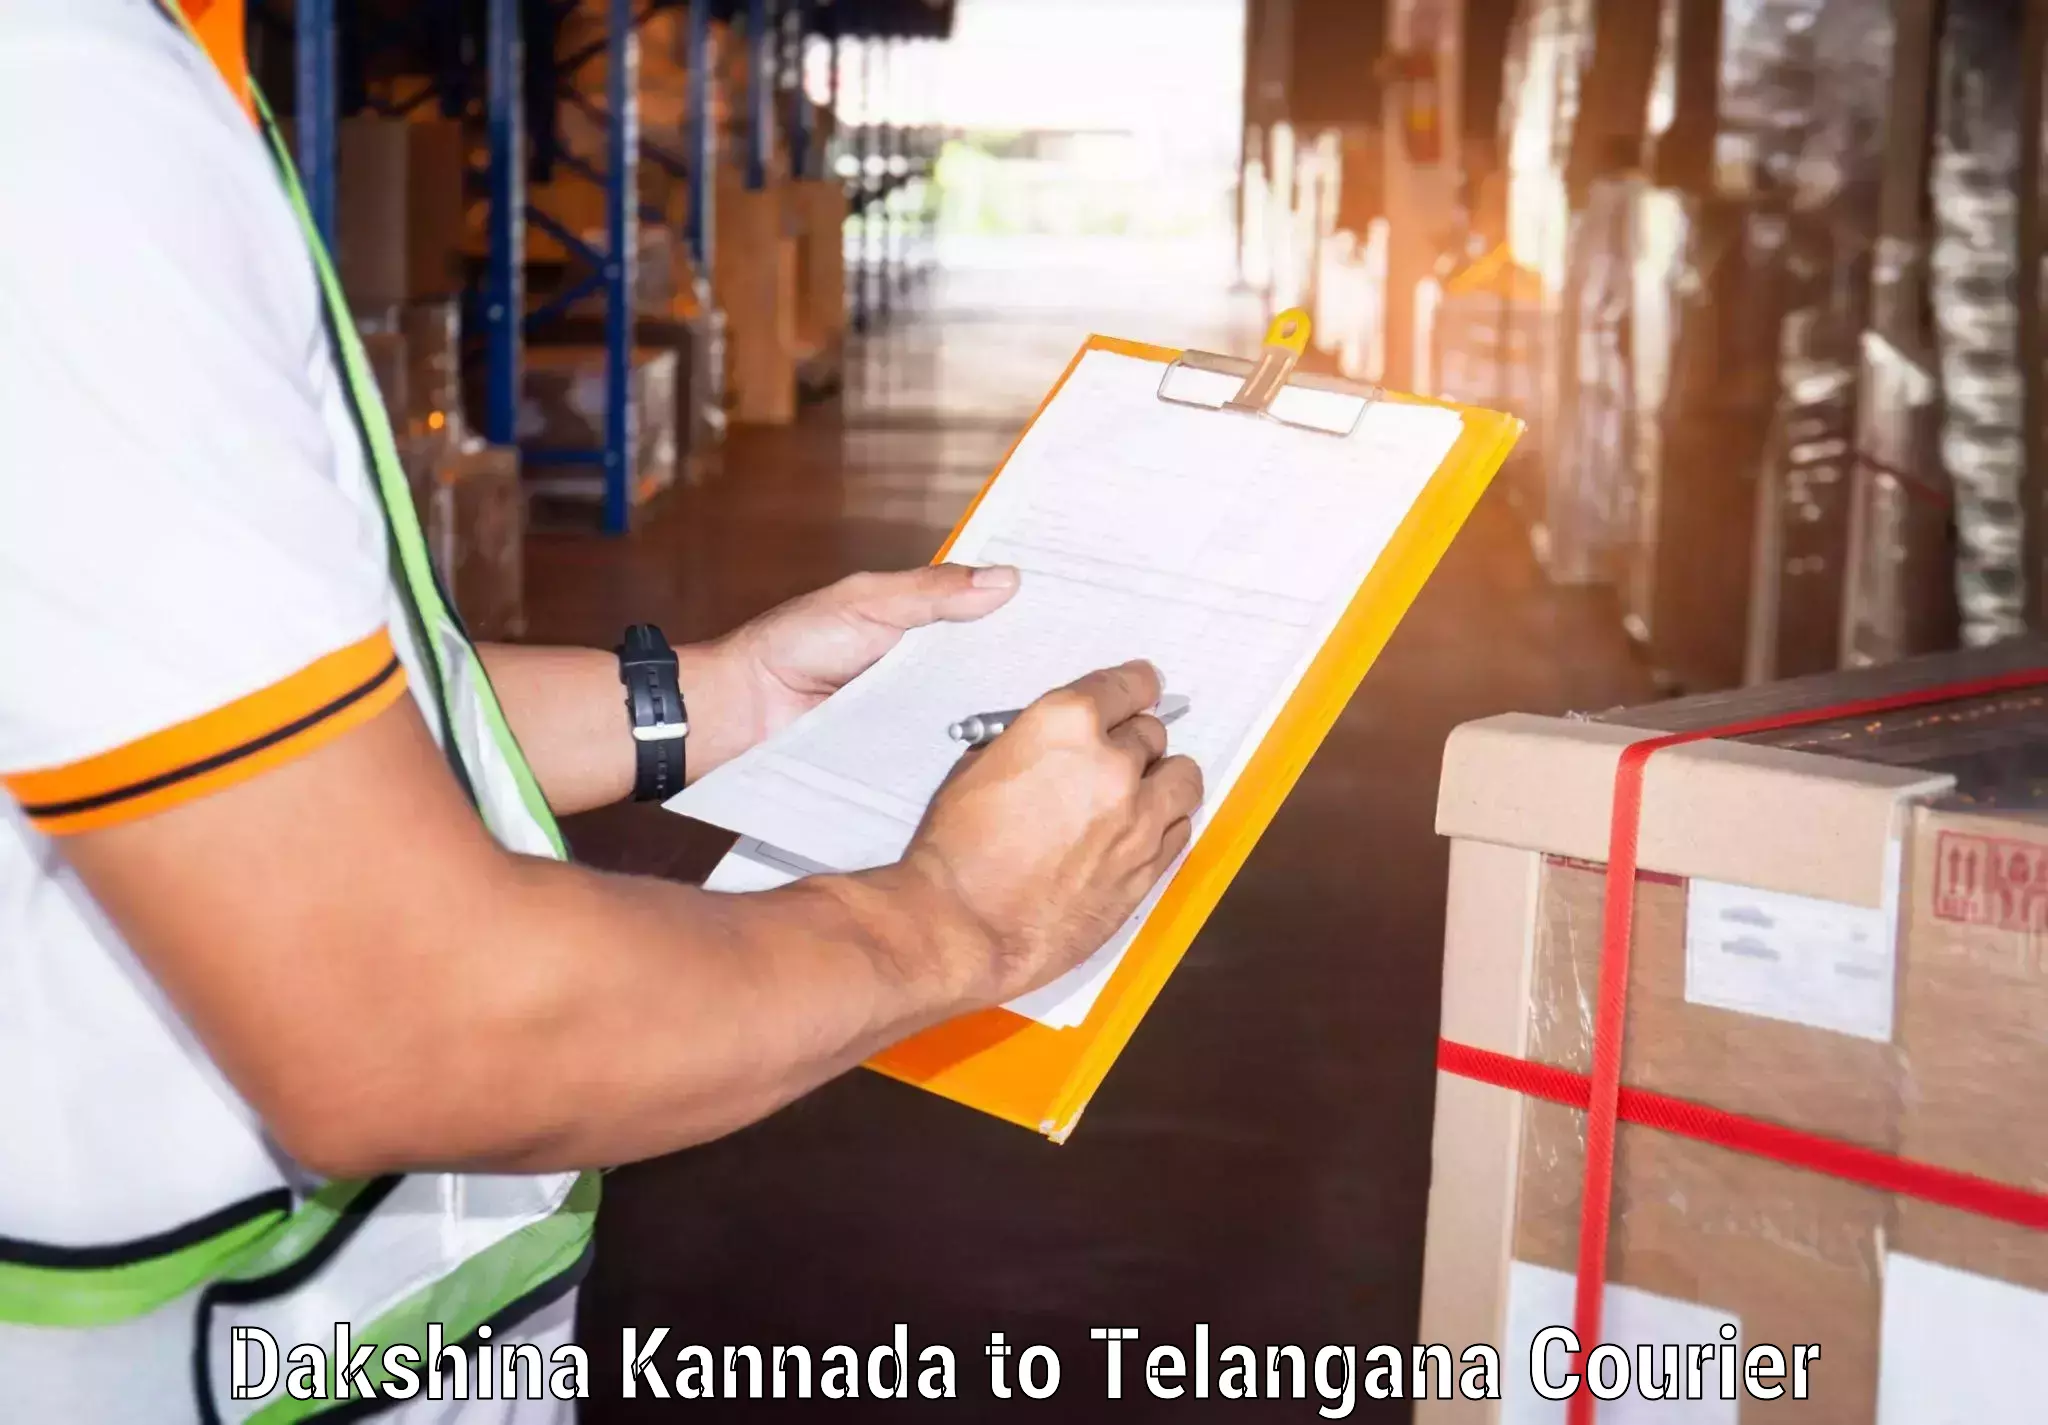 Courier service comparison Dakshina Kannada to Telangana